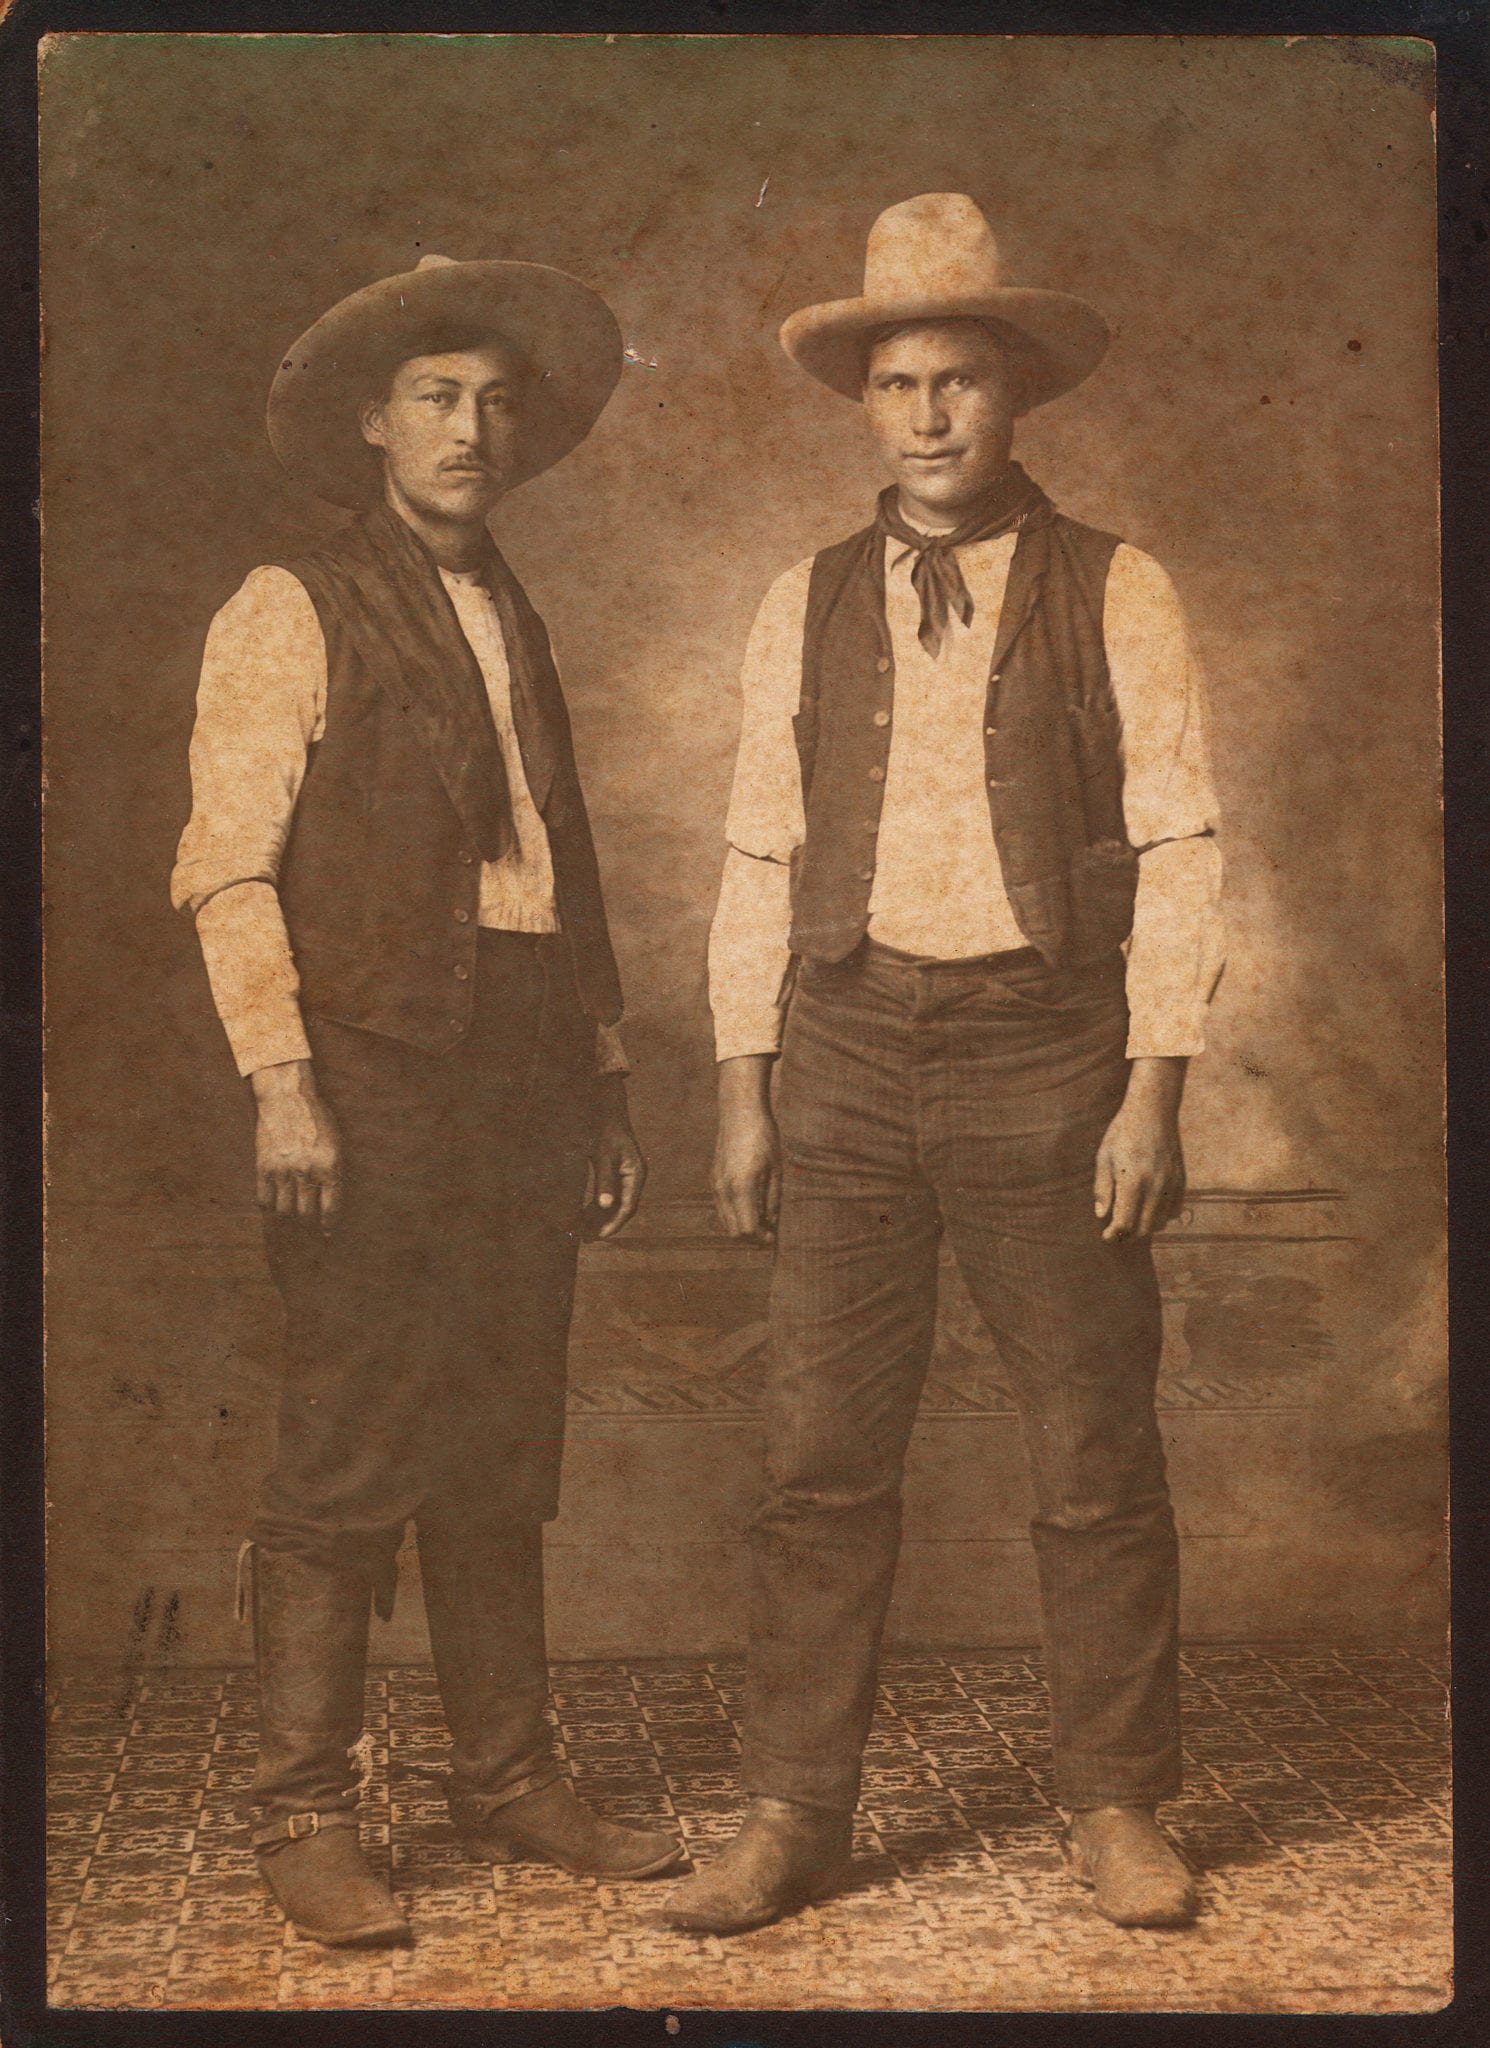 traditional cowboy clothing